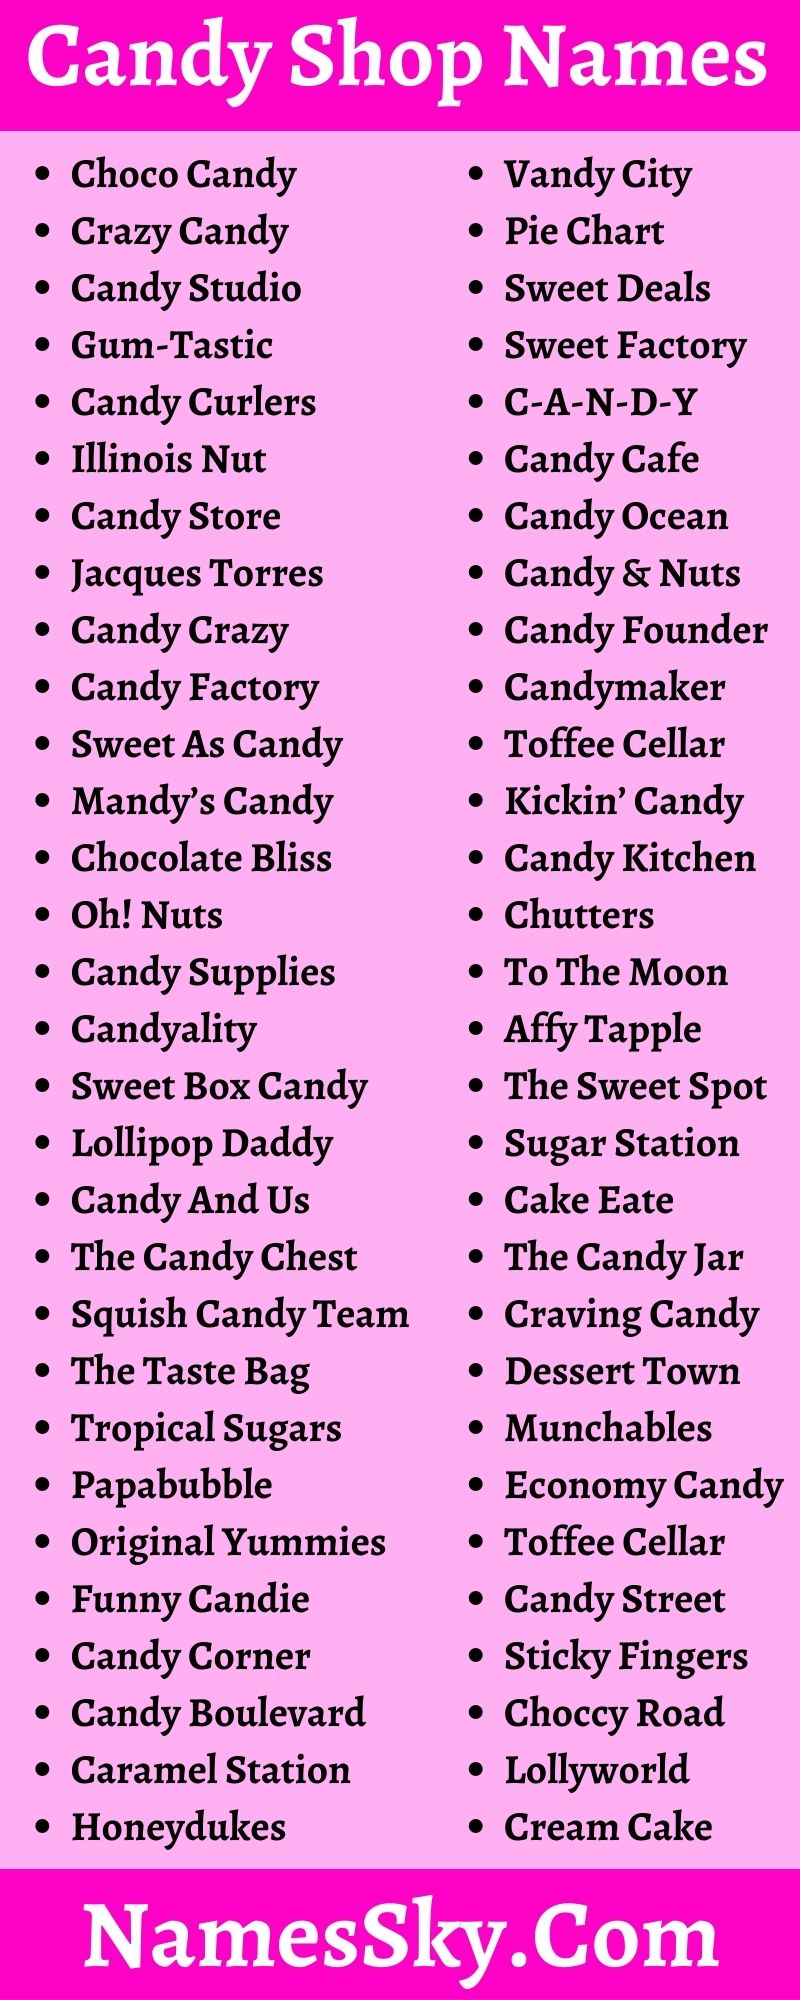 Candy Shop Names